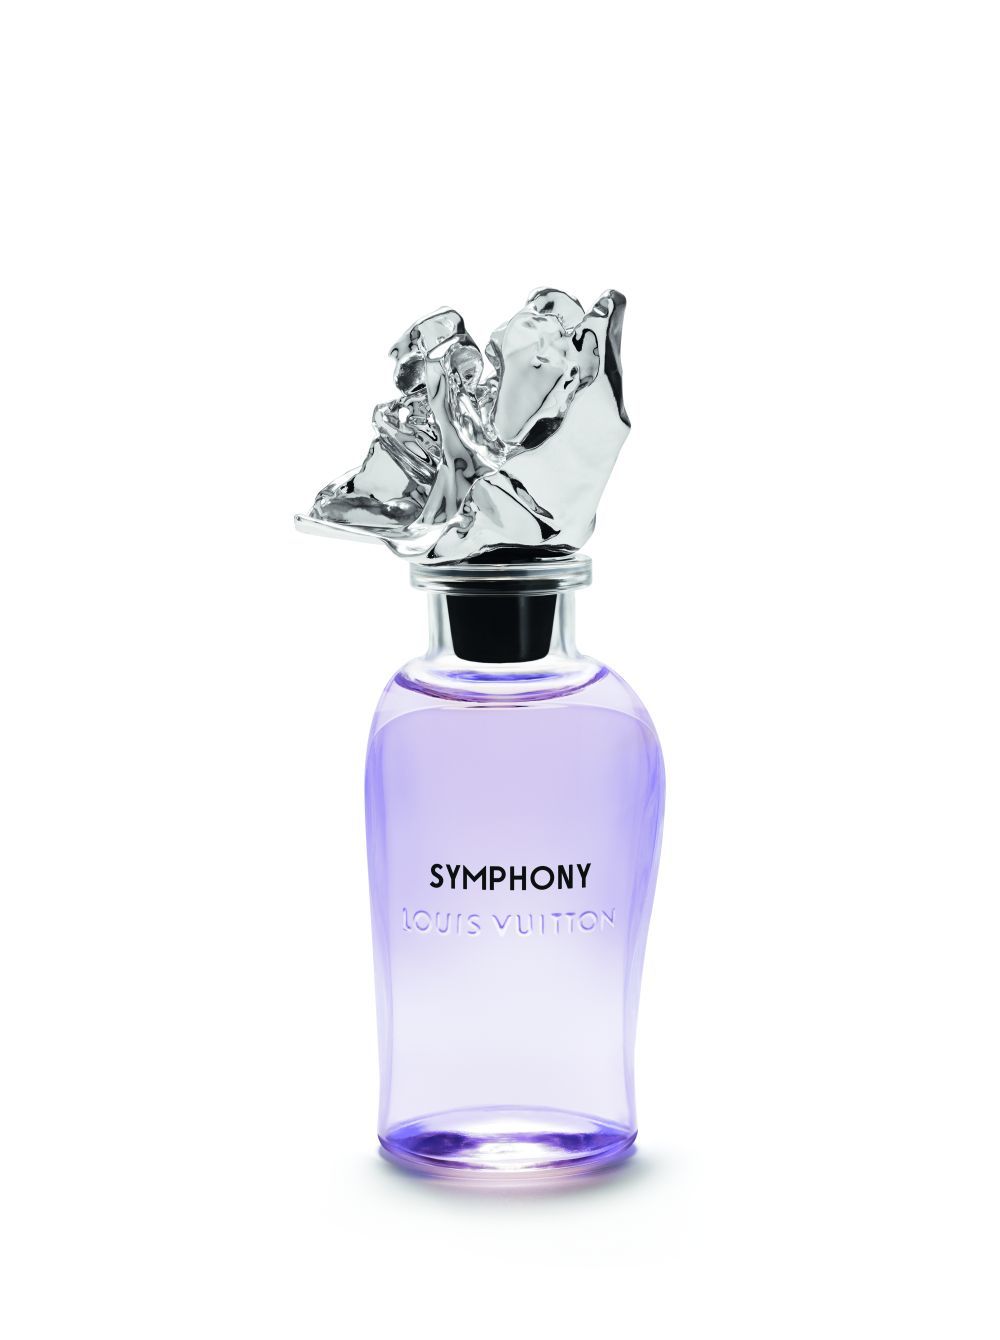 Extracto de perfume Symphony de Louis Vuitton.